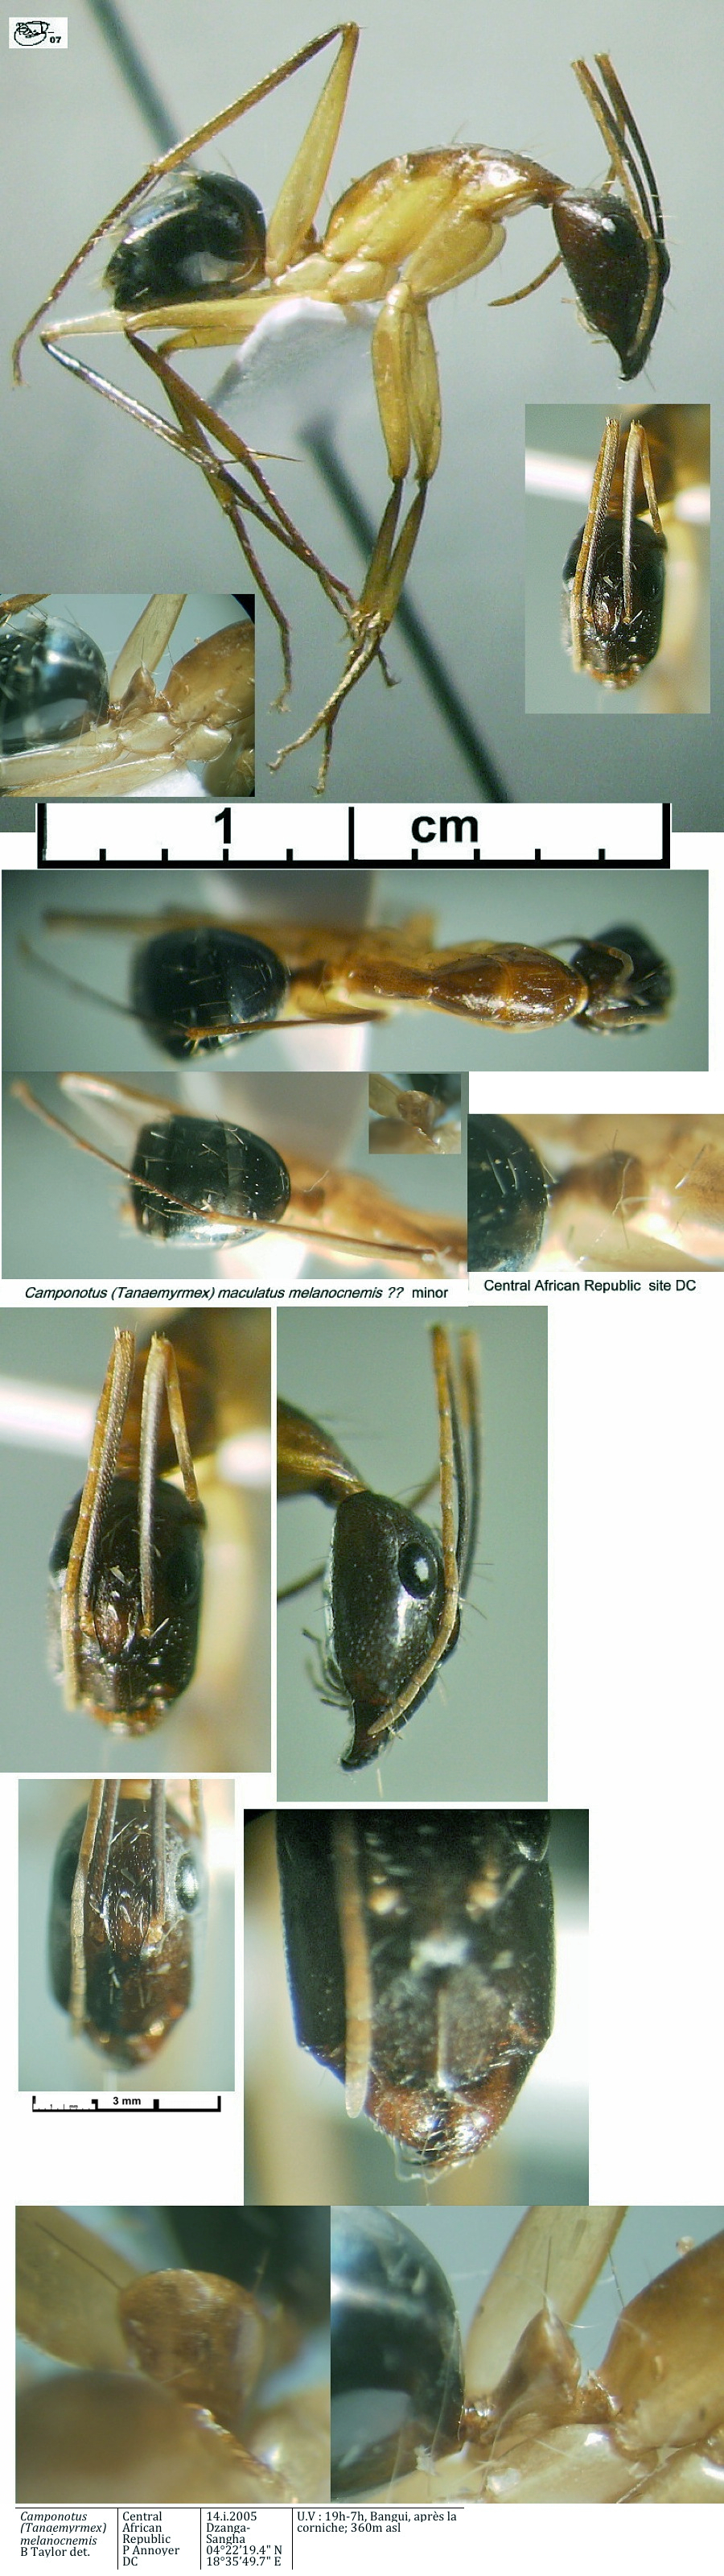 {Camponotus maculatus melanocnemis major}